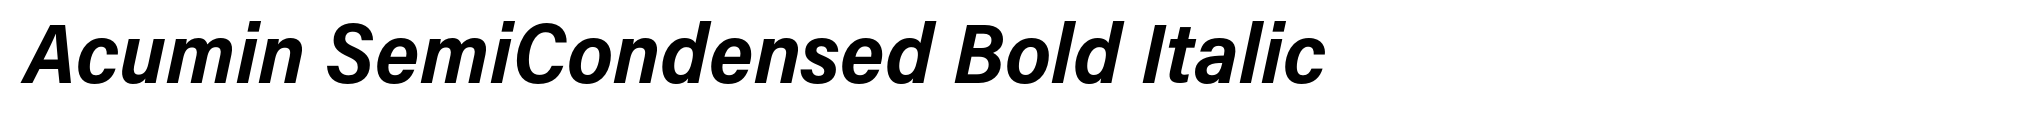 Acumin SemiCondensed Bold Italic image